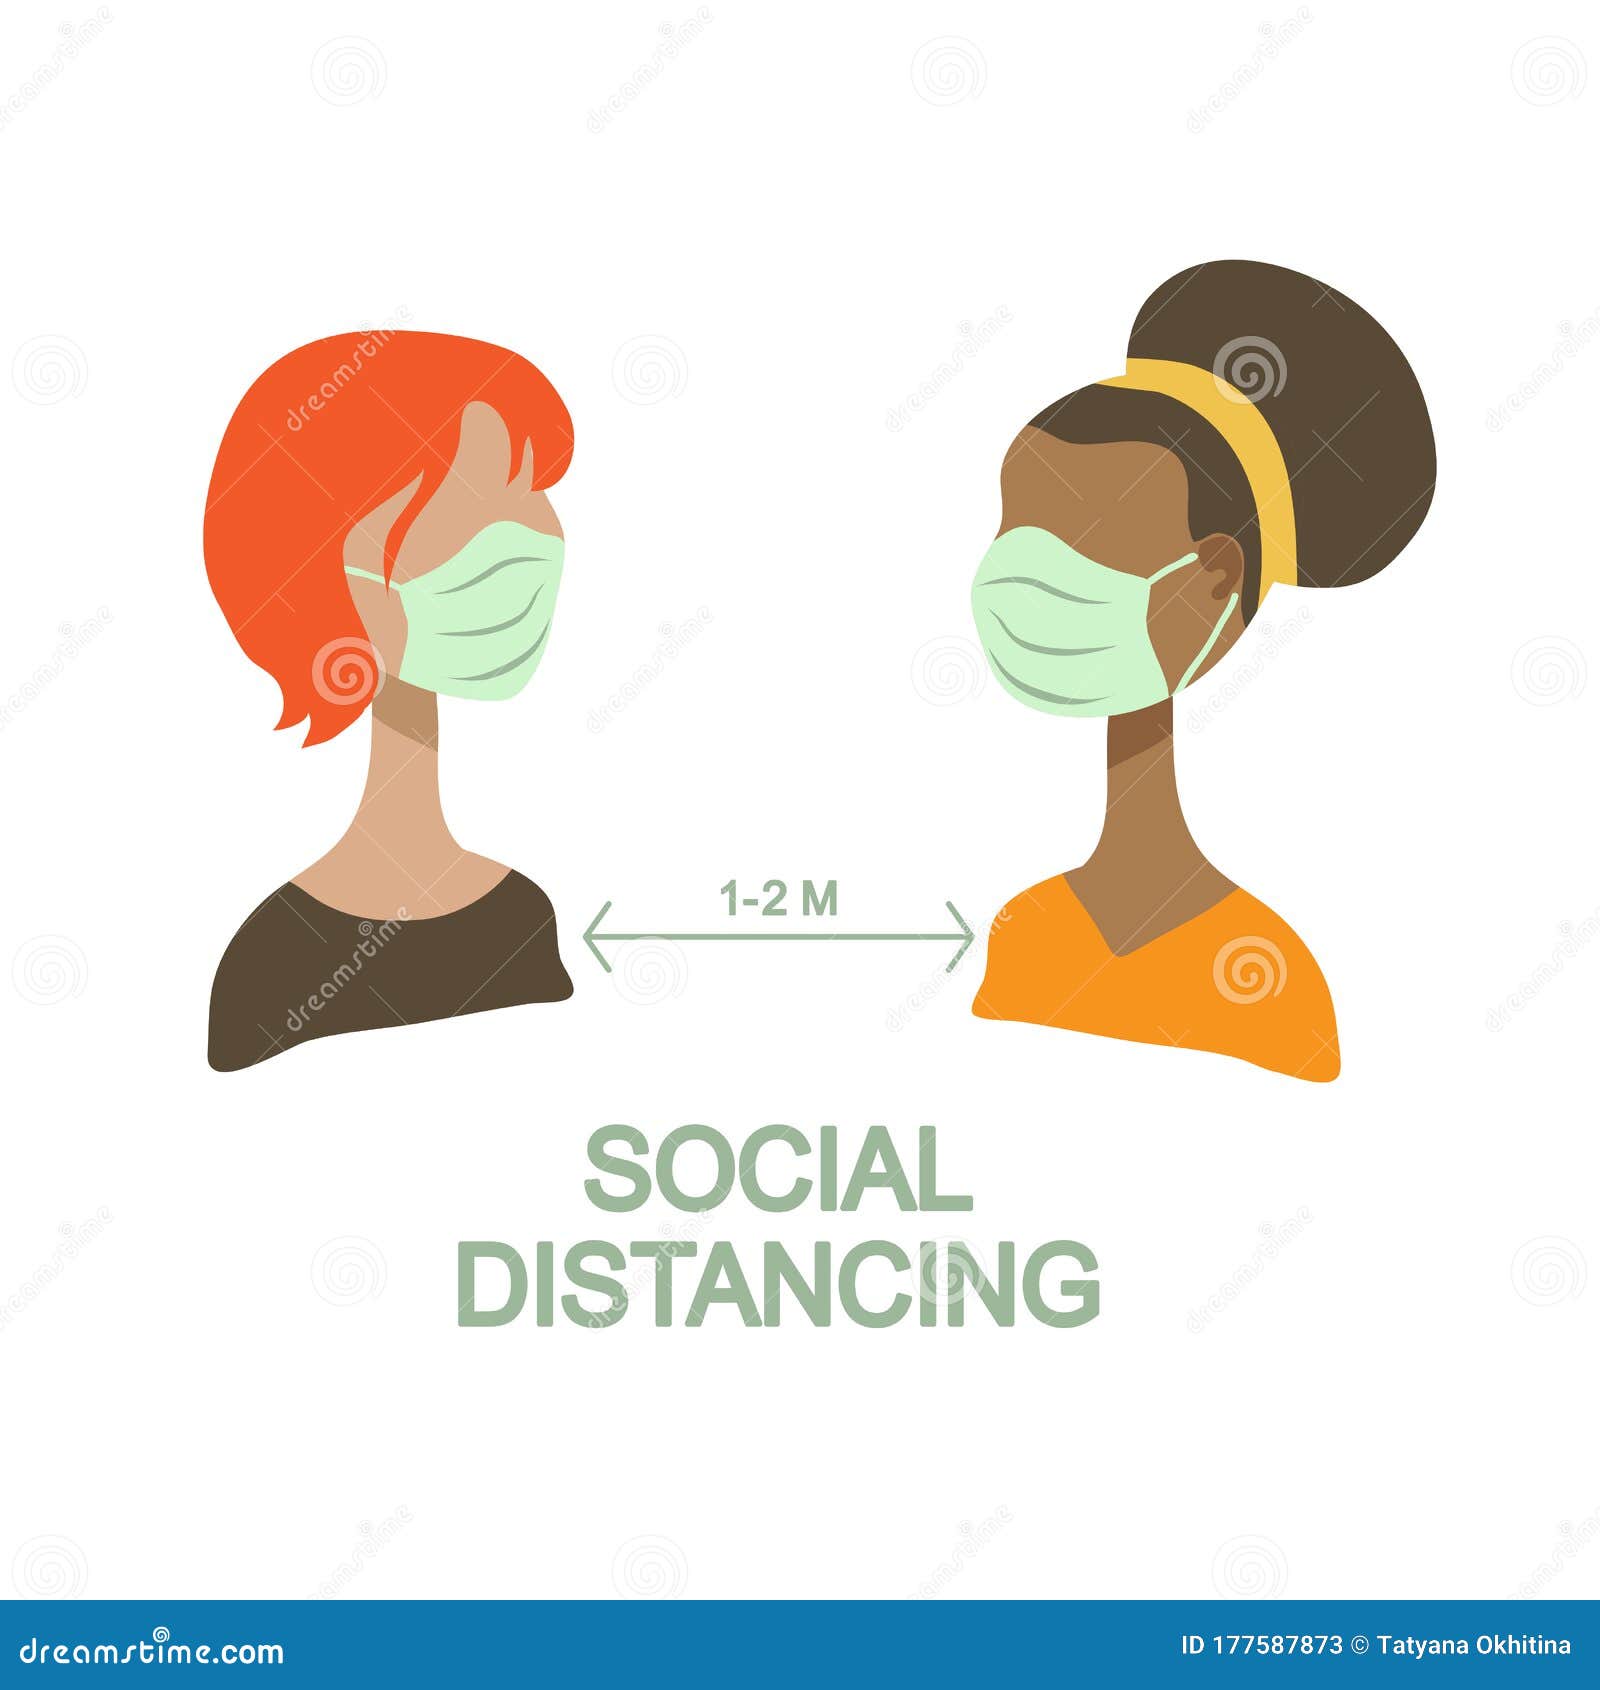 social distancing-02